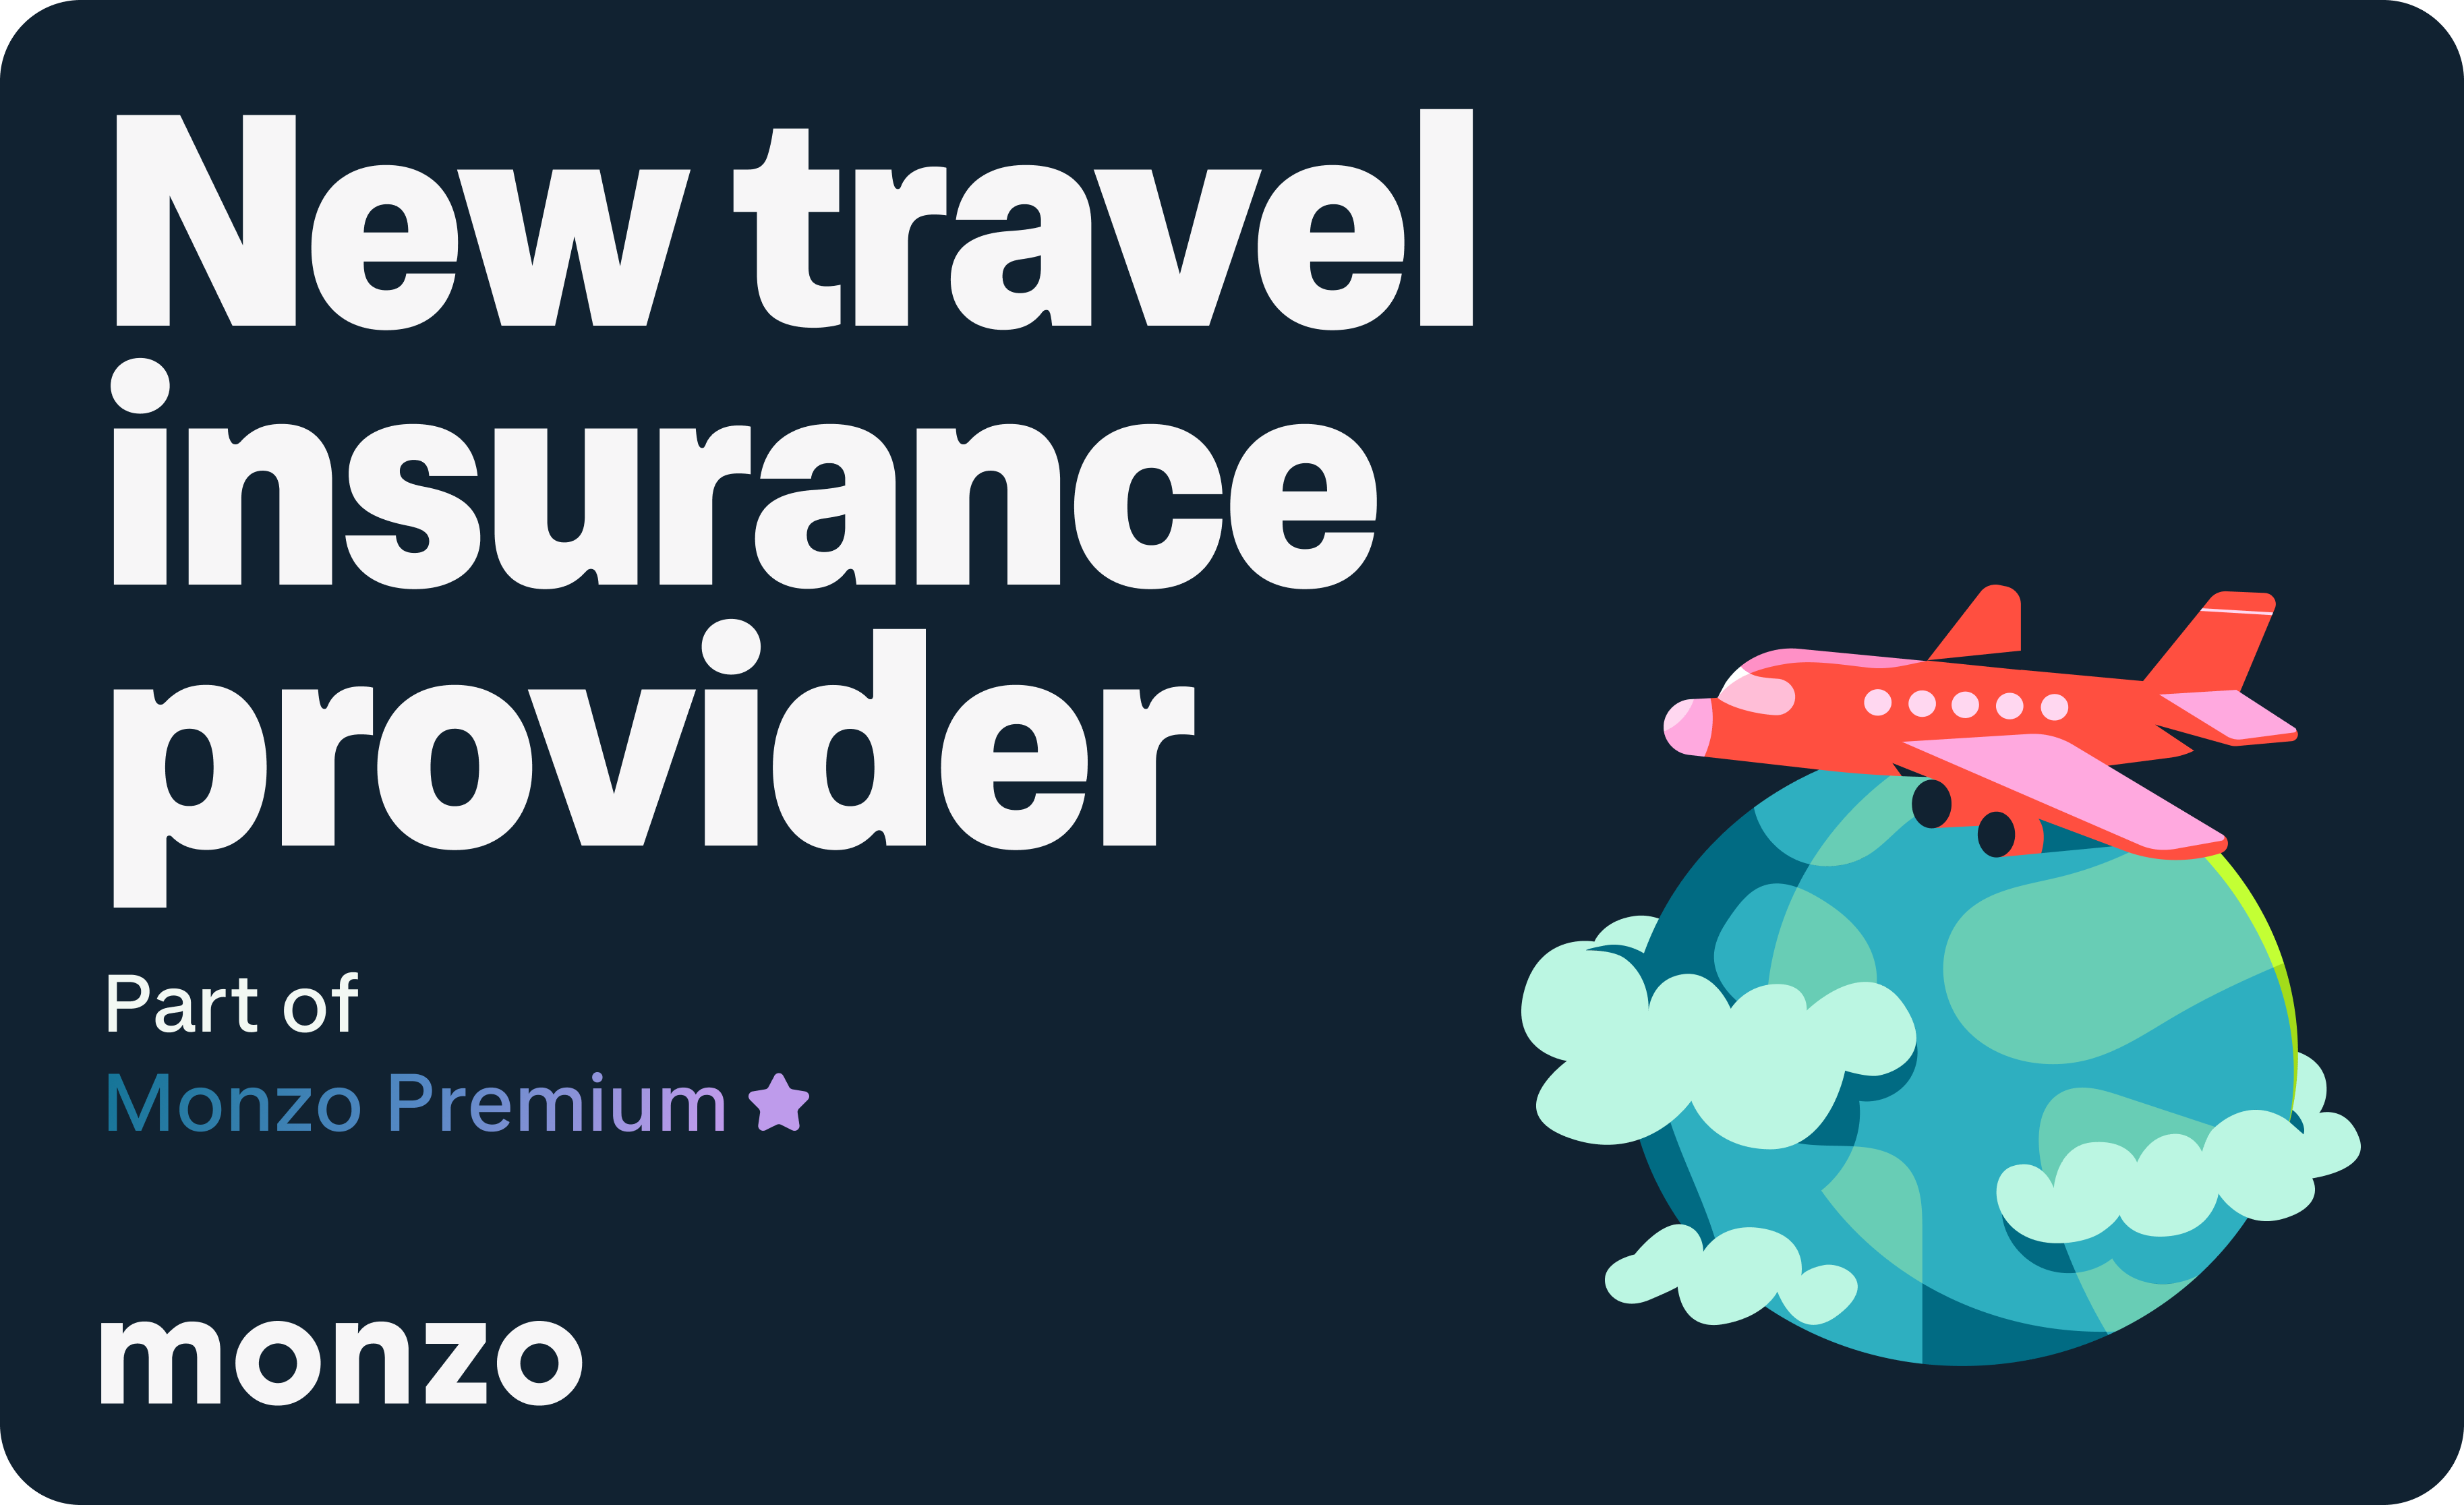 monzo premium travel insurance family